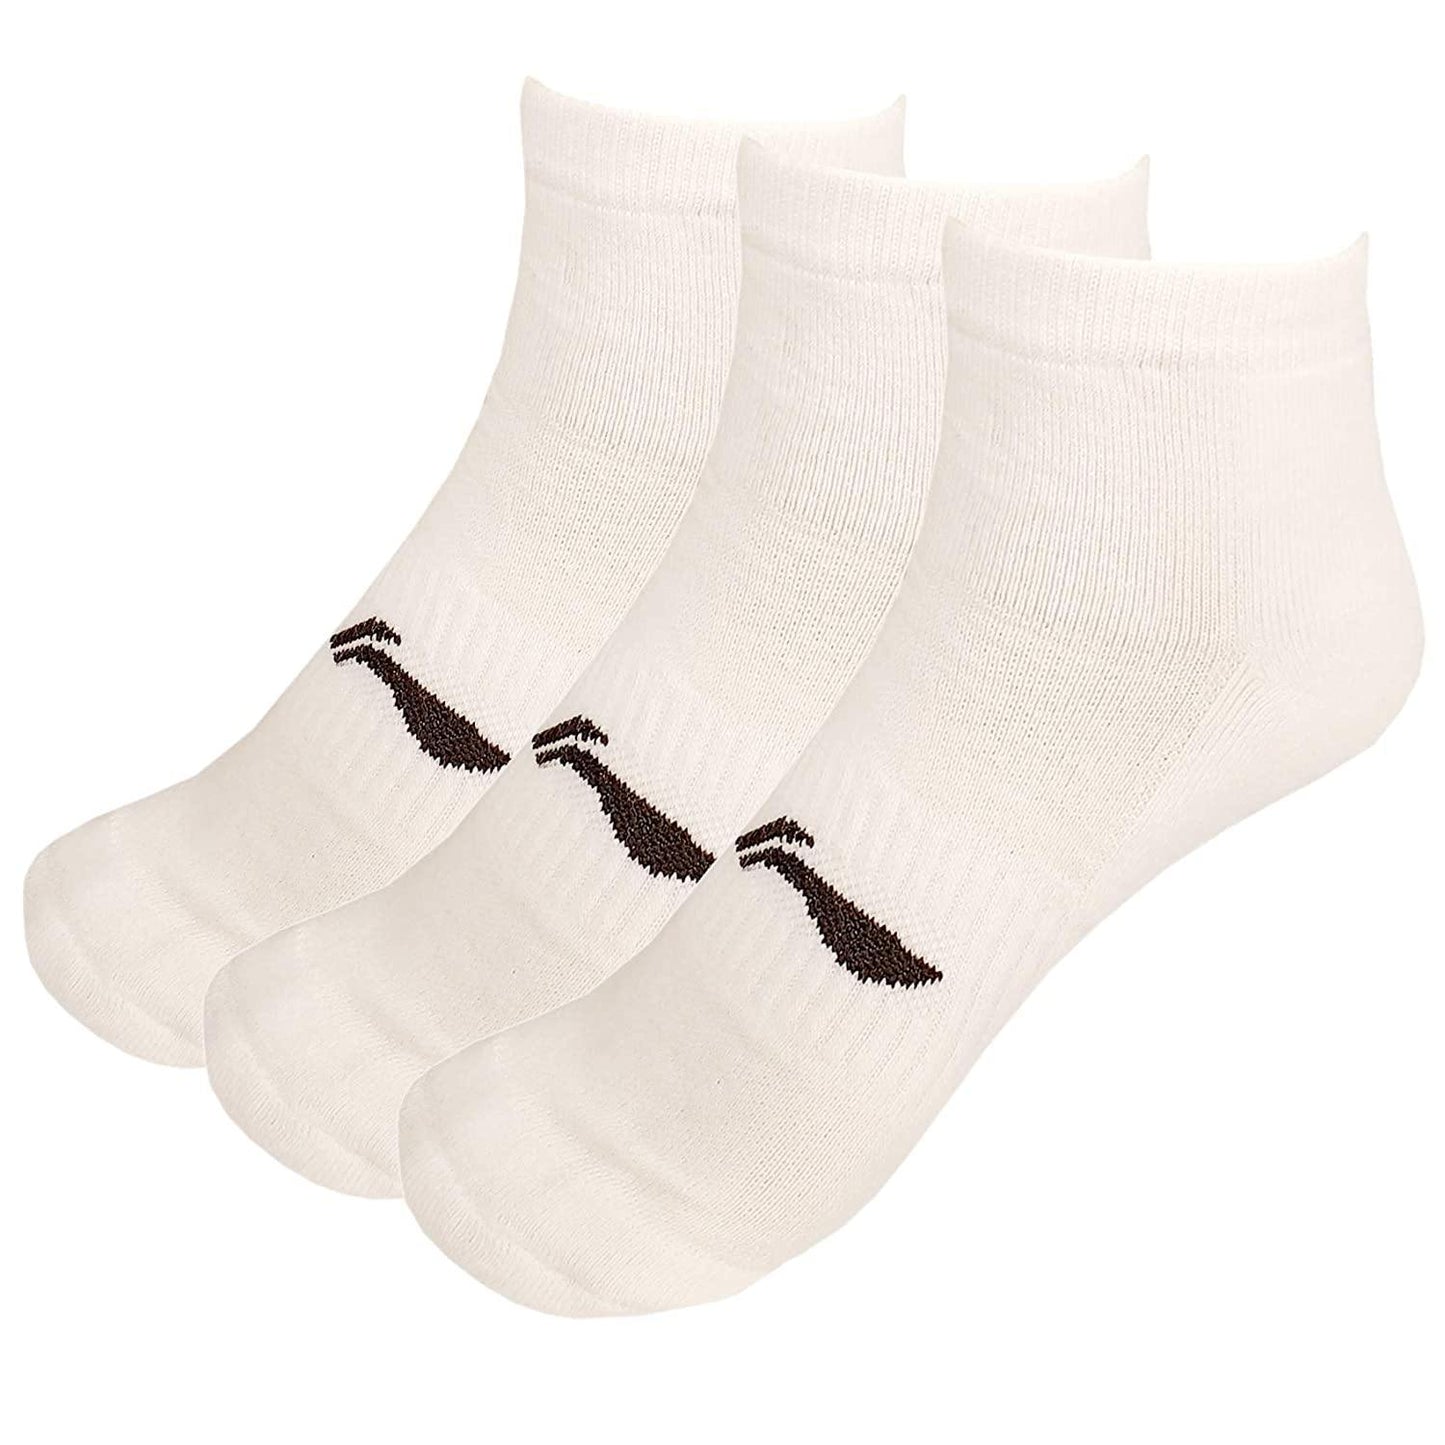 Li-Ning Cotton Men's Sports Socks, Ankle length, Pack of 3, White - Best Price online Prokicksports.com